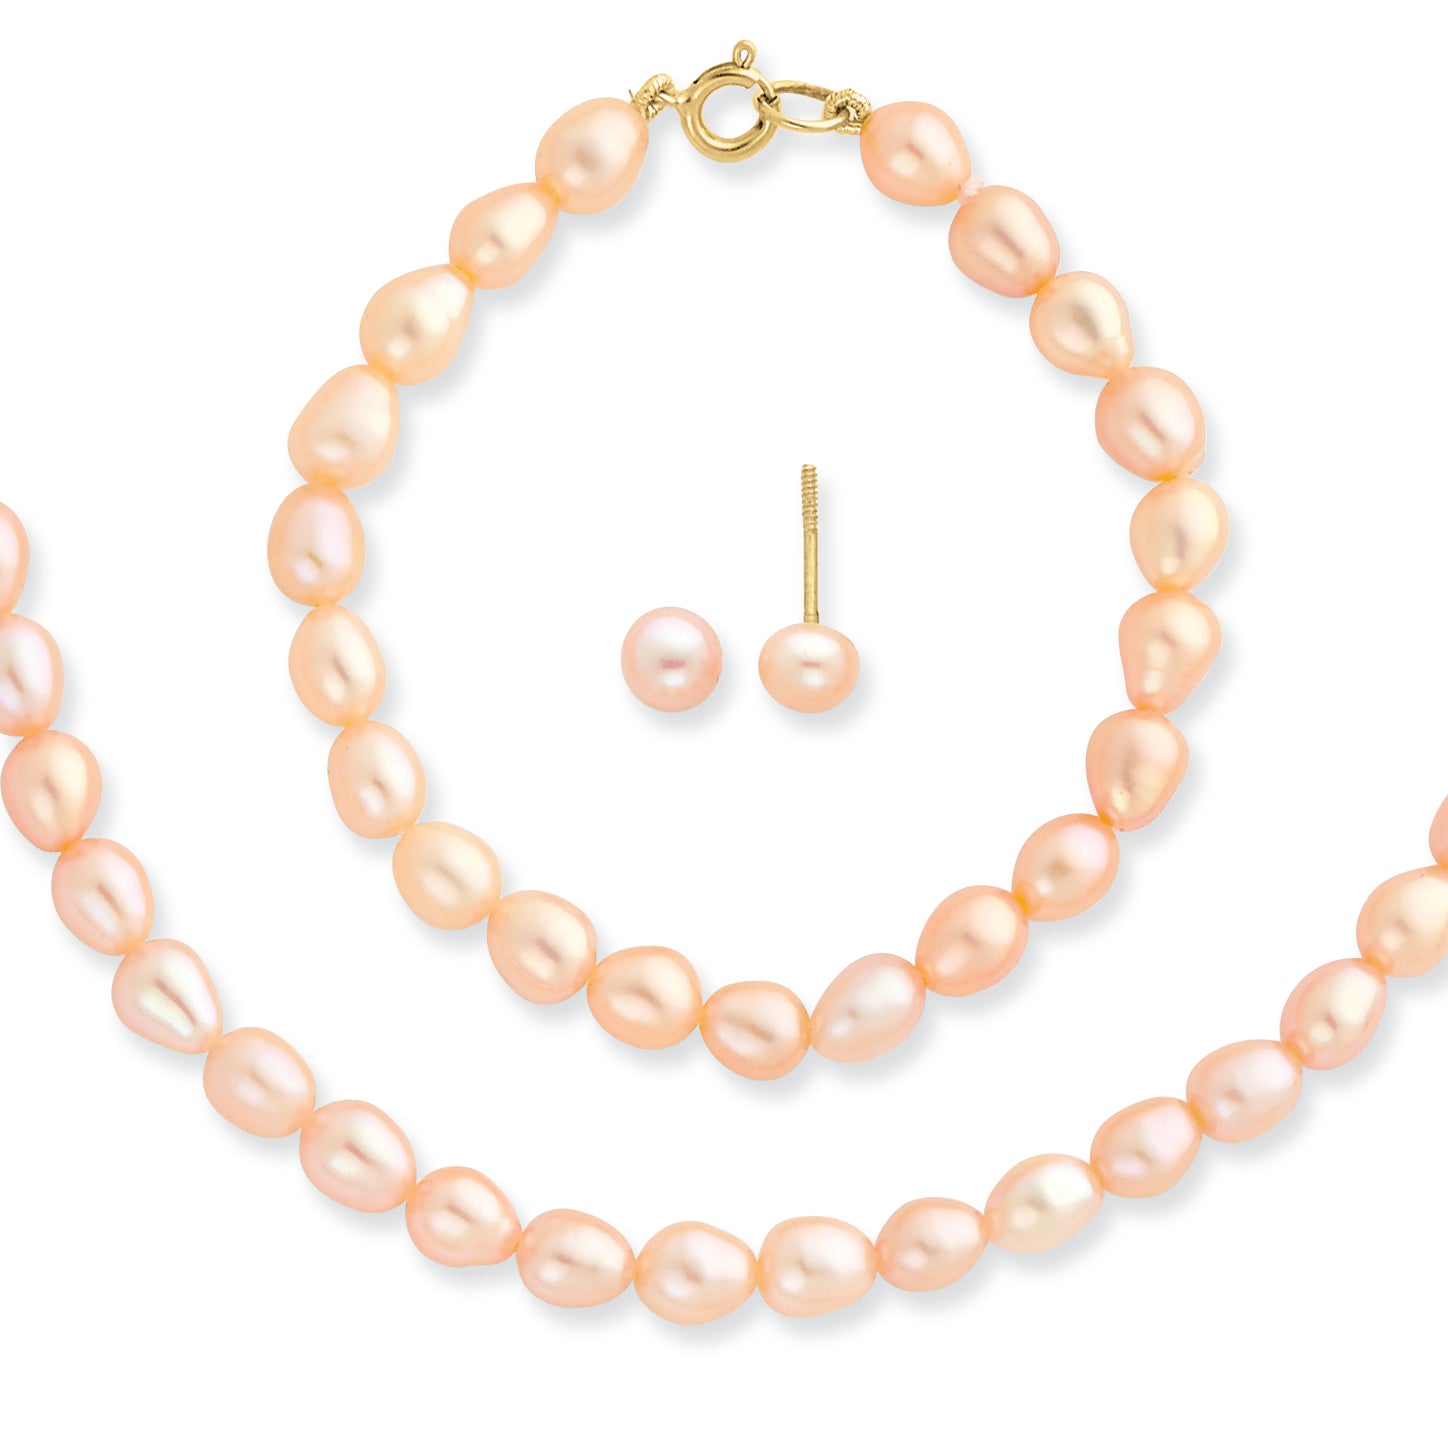 14K Gold Pink FW Cultured Pearl 14 in. Necklace, Bracelet & Earrings Set"